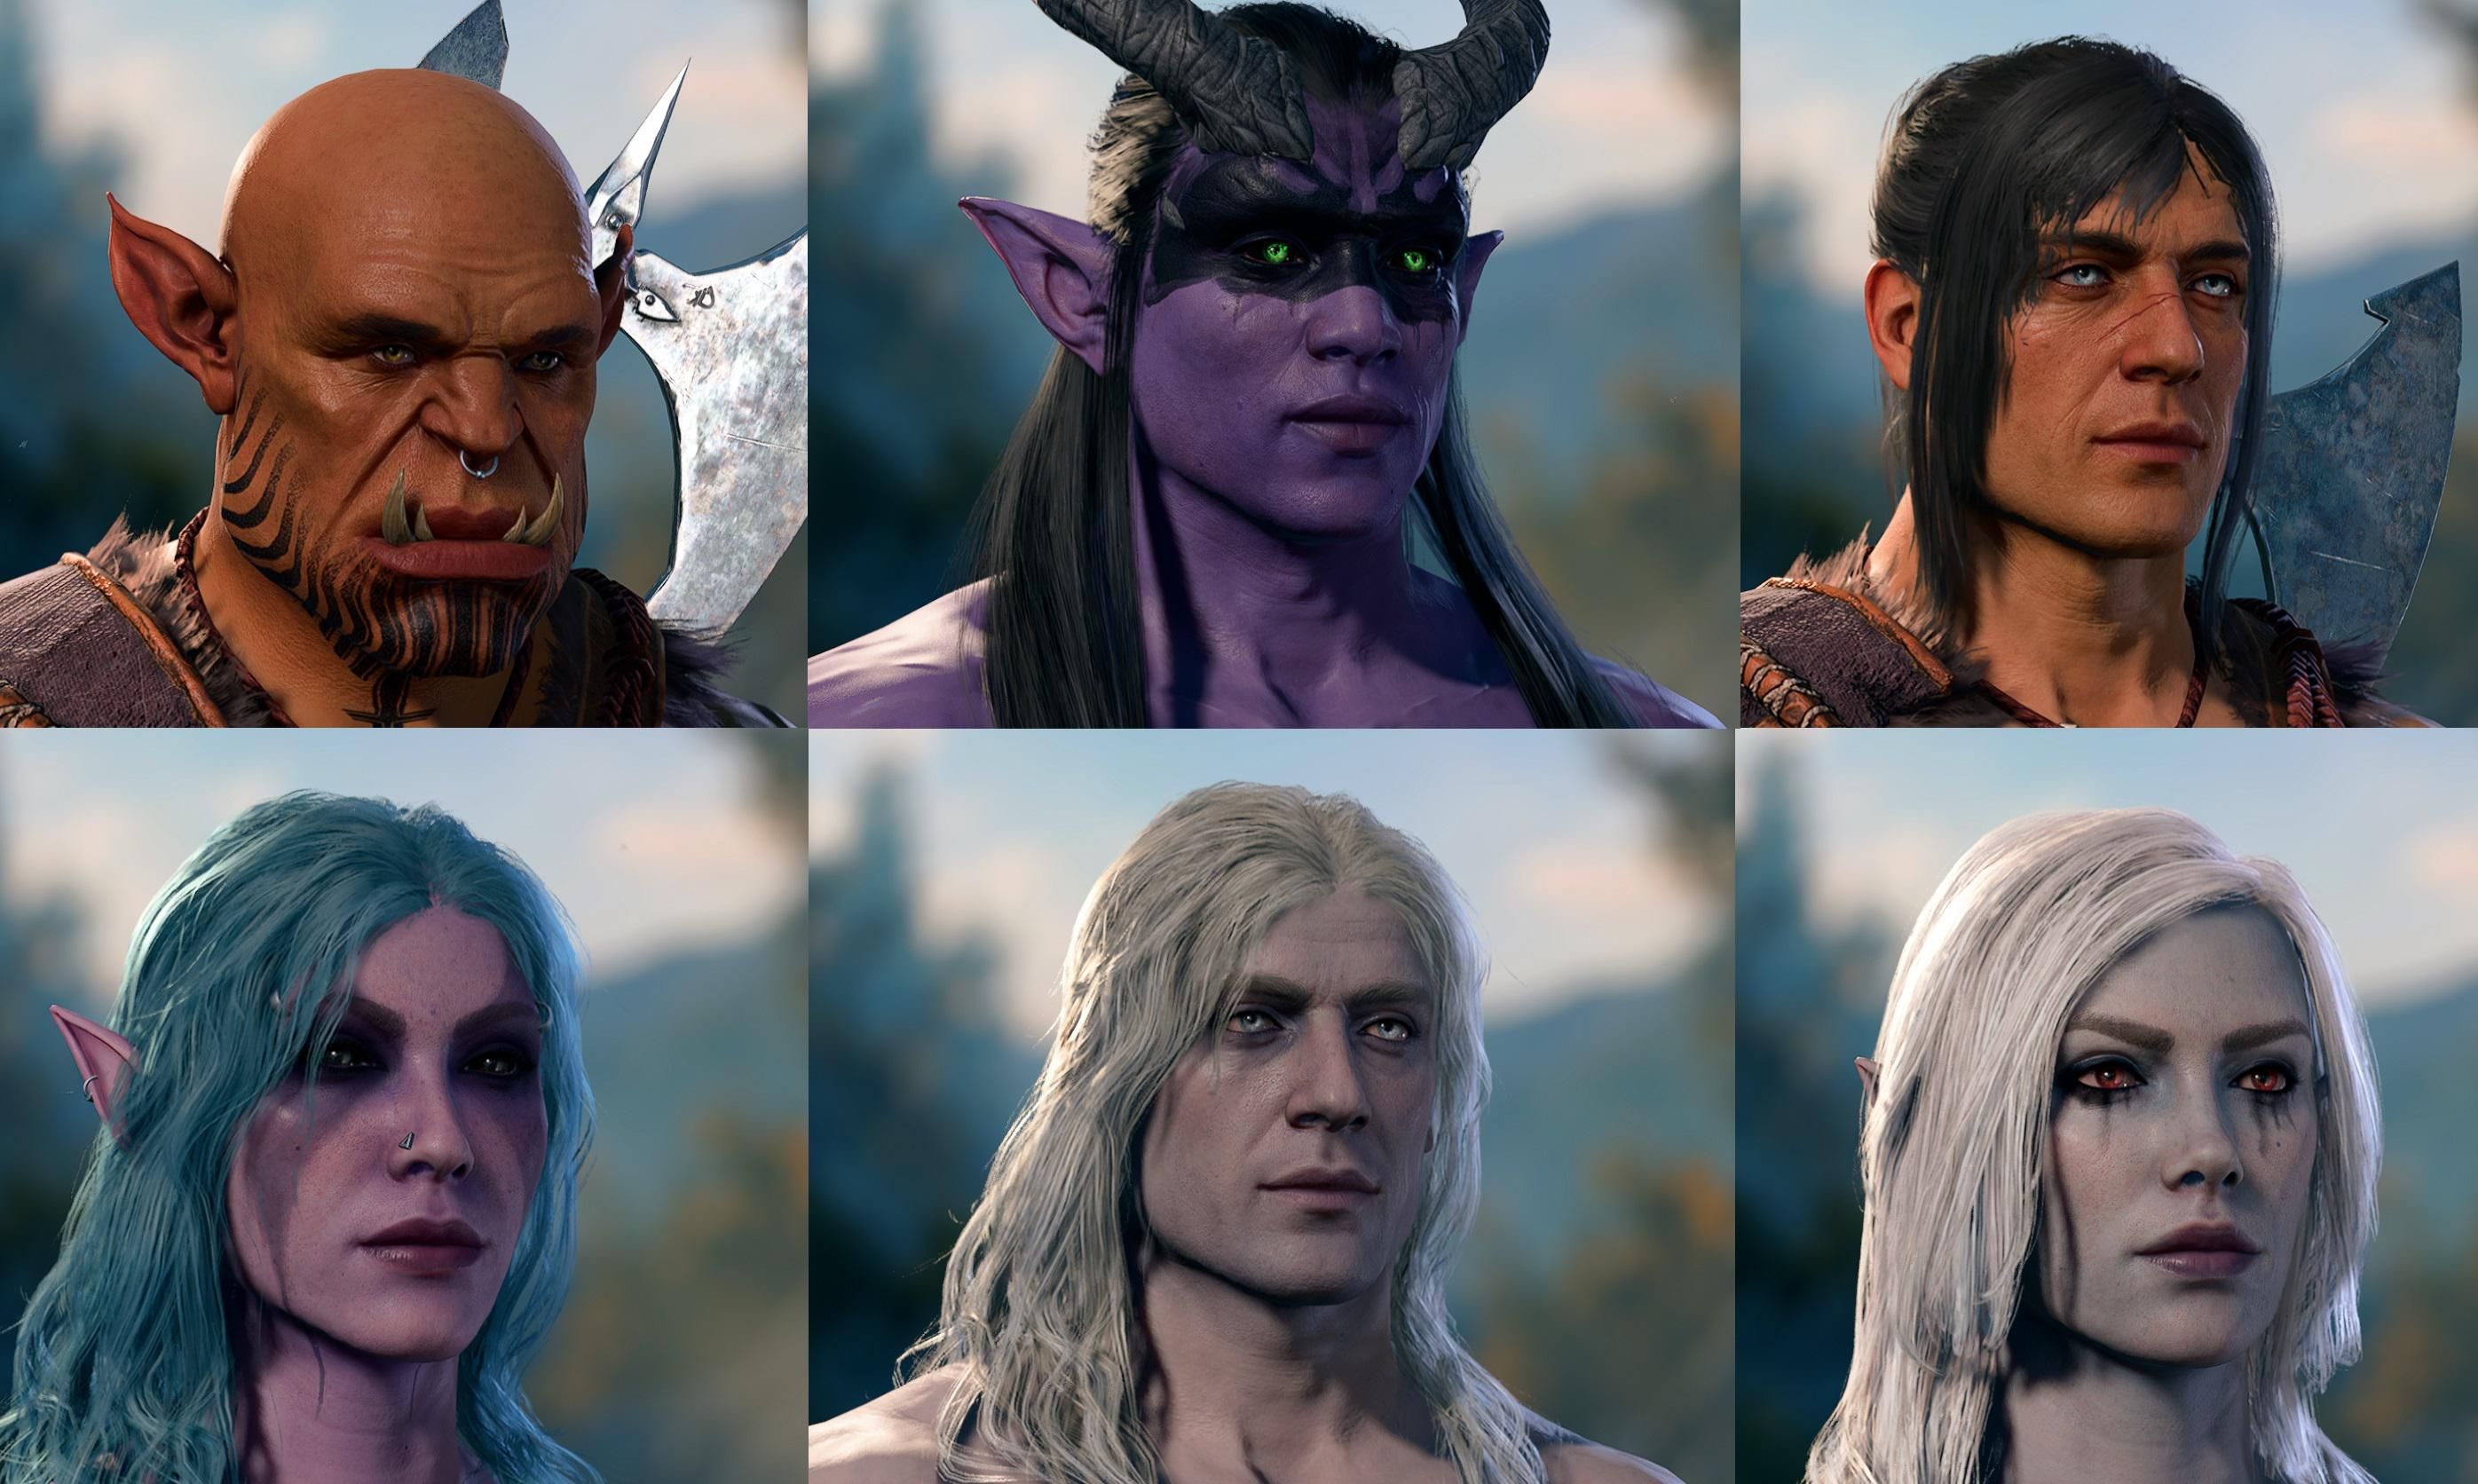 Garosh, Illidan, Varian, Tyrande, Arthas, and Sylvanas from World of Warcraft as Baldur's Gate 3 characters